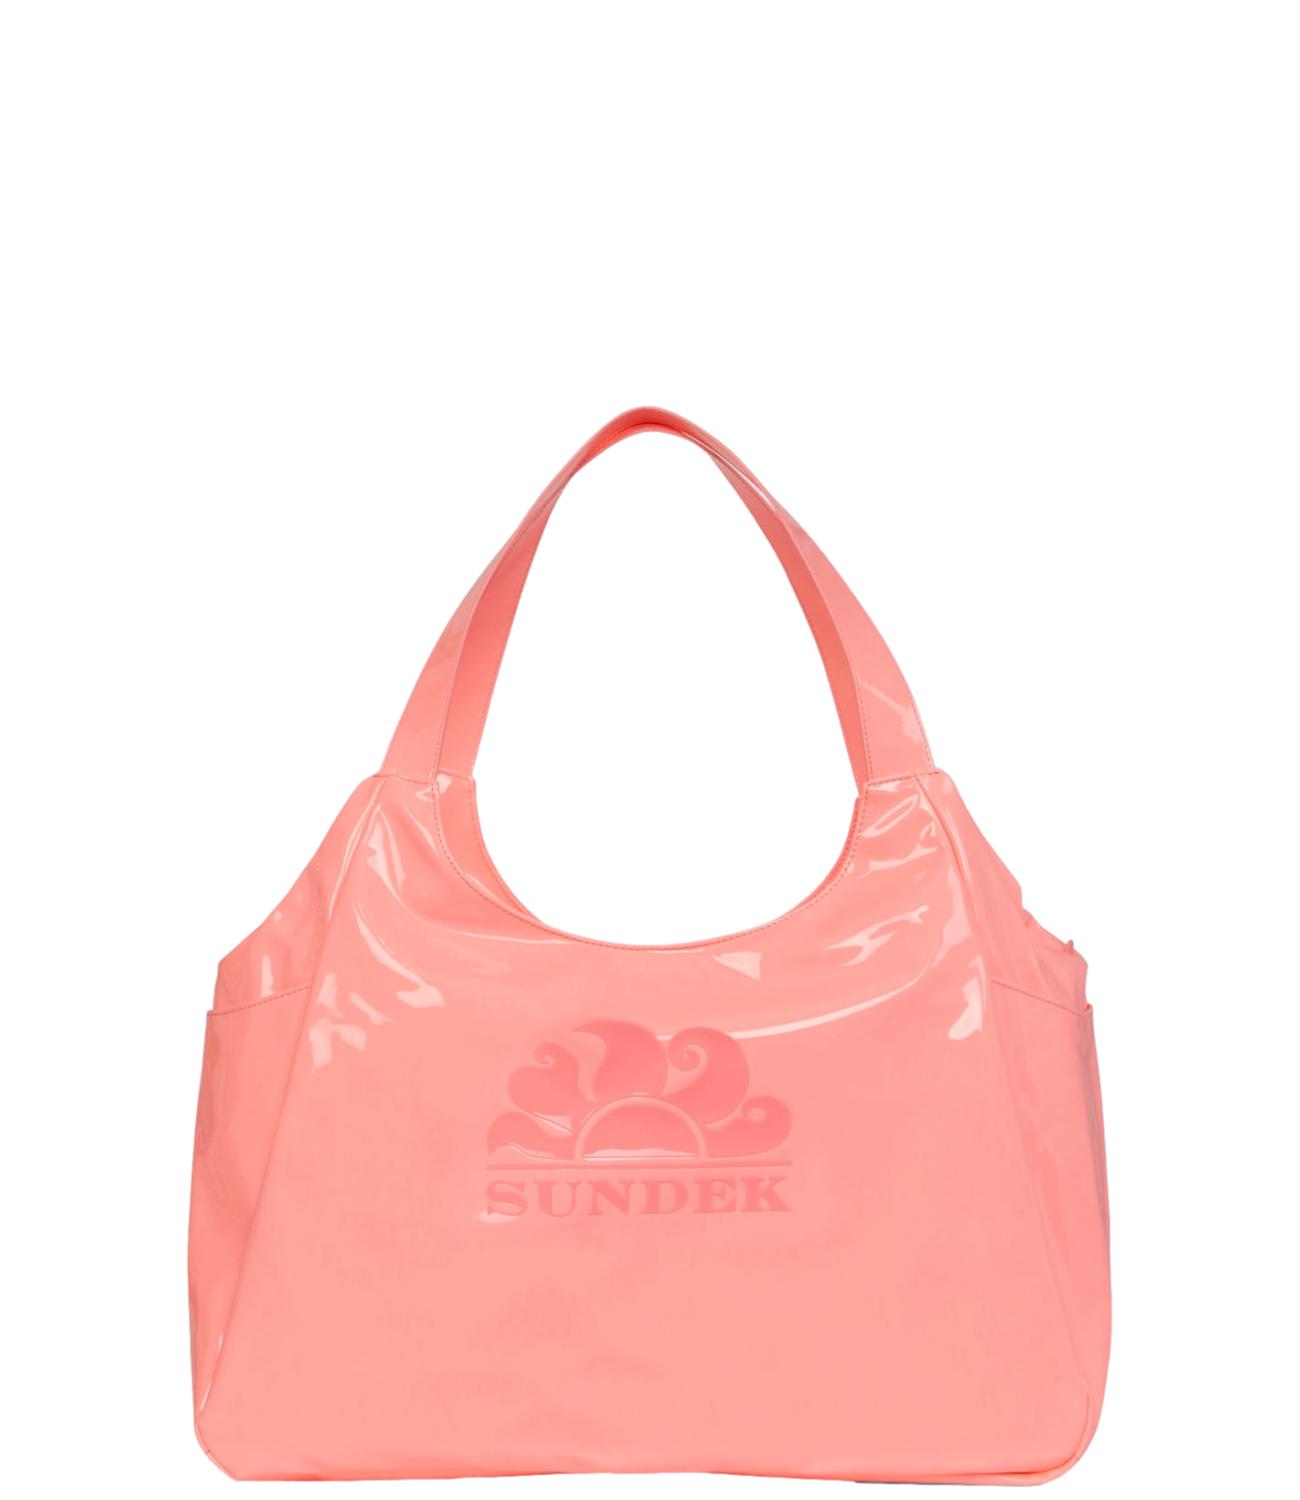 Sundek Bag borsa rosa pesca